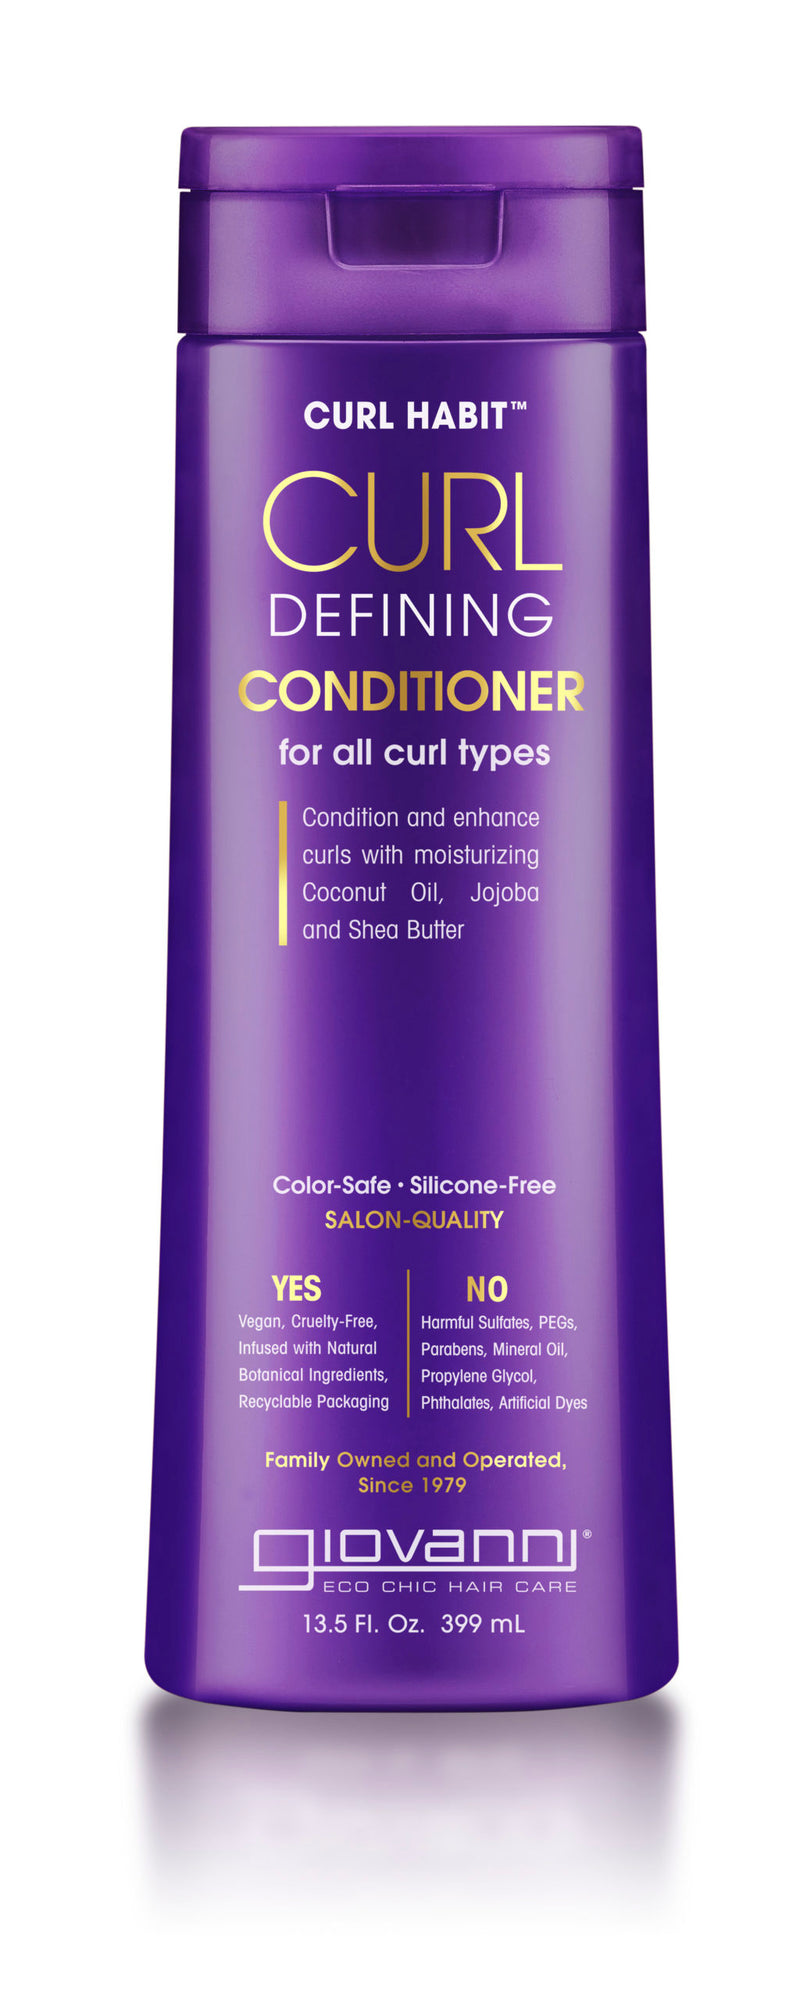 Giovanni Curl Habit Curl Defining No Foaming Conditioning Shampoo